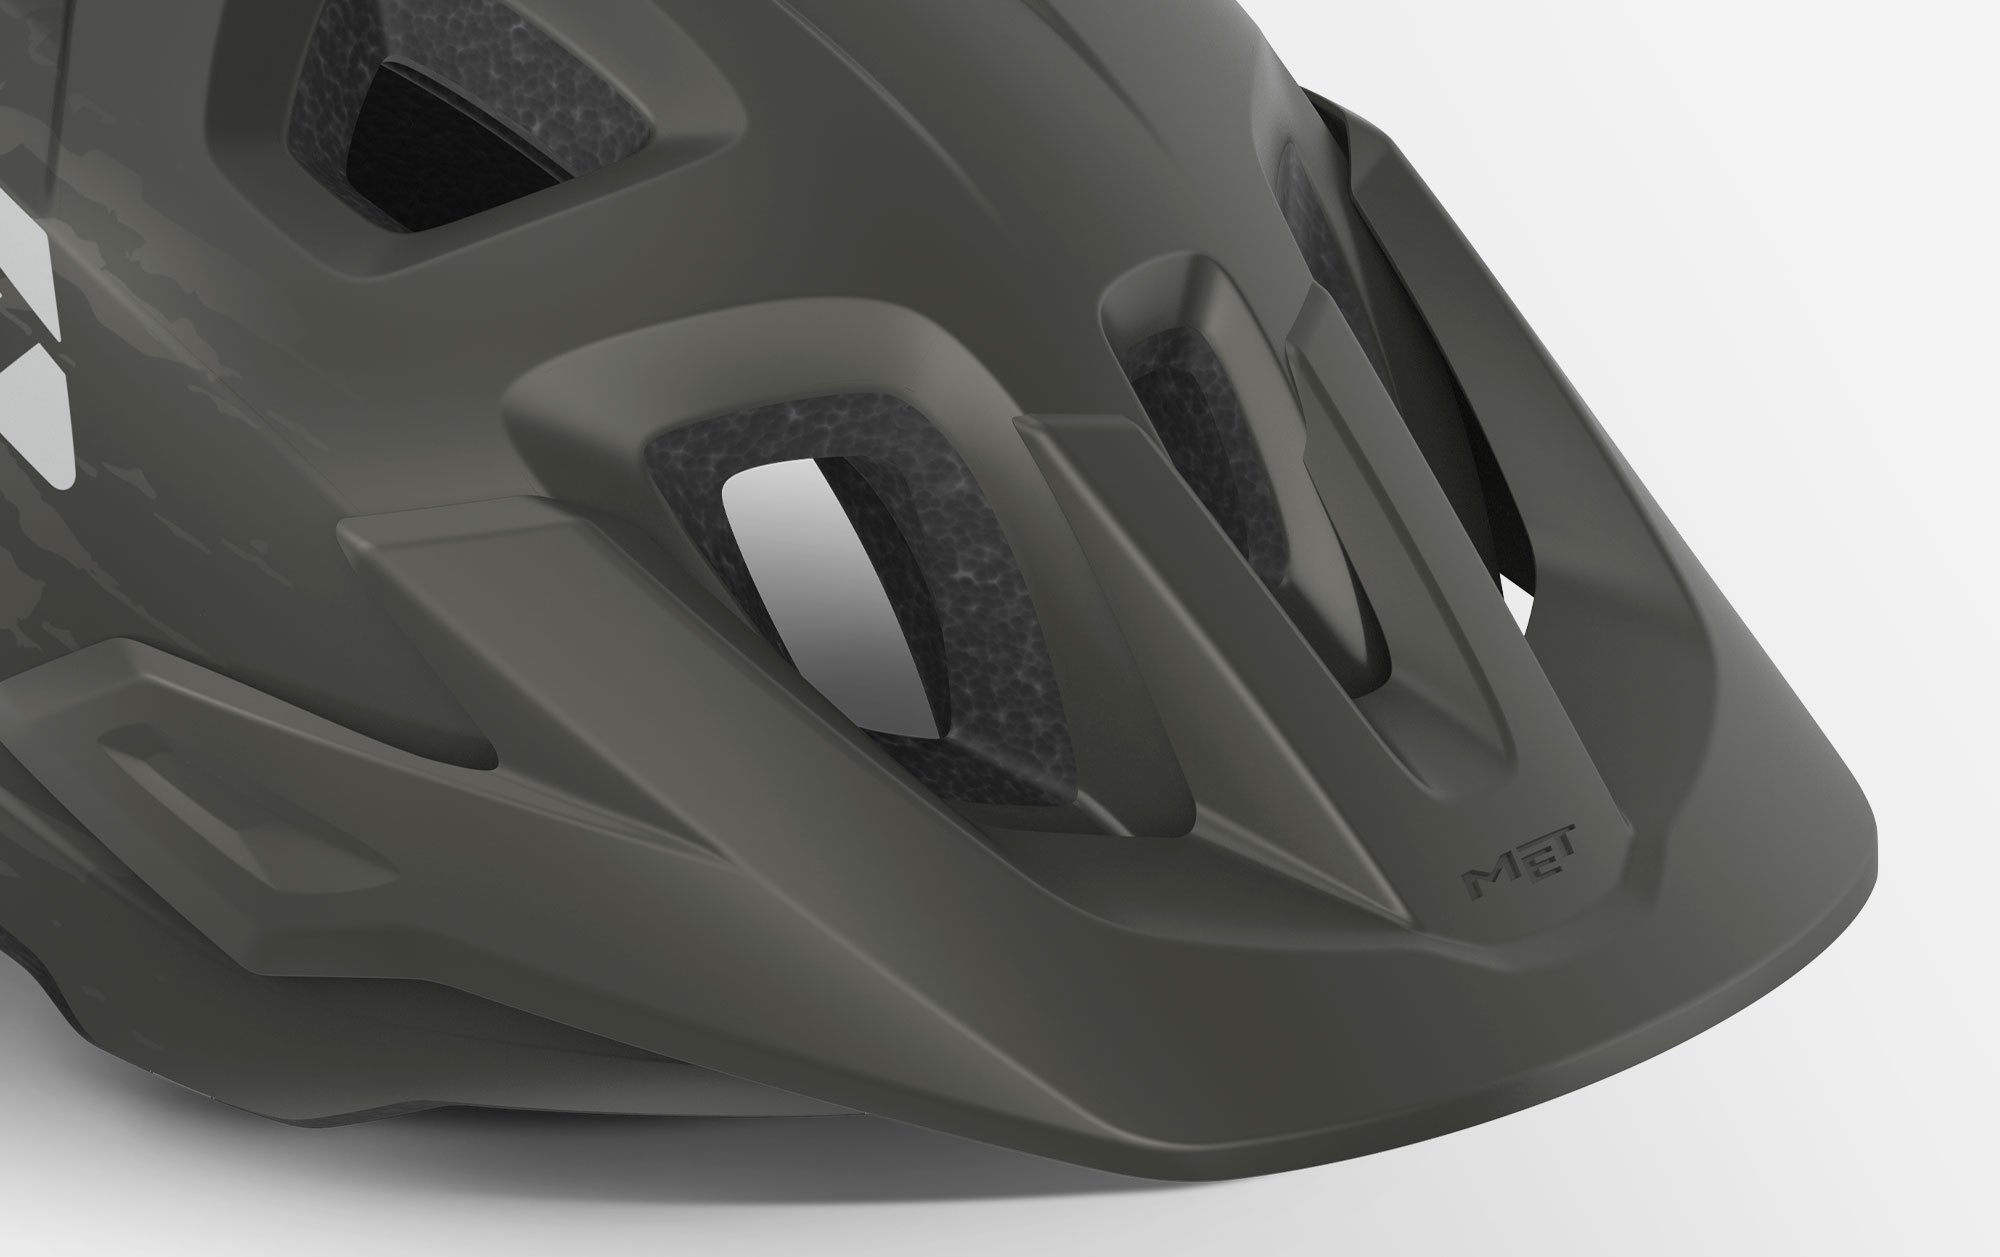 MET Echo Mips Trail, Cross Country and E-MTB Helmet